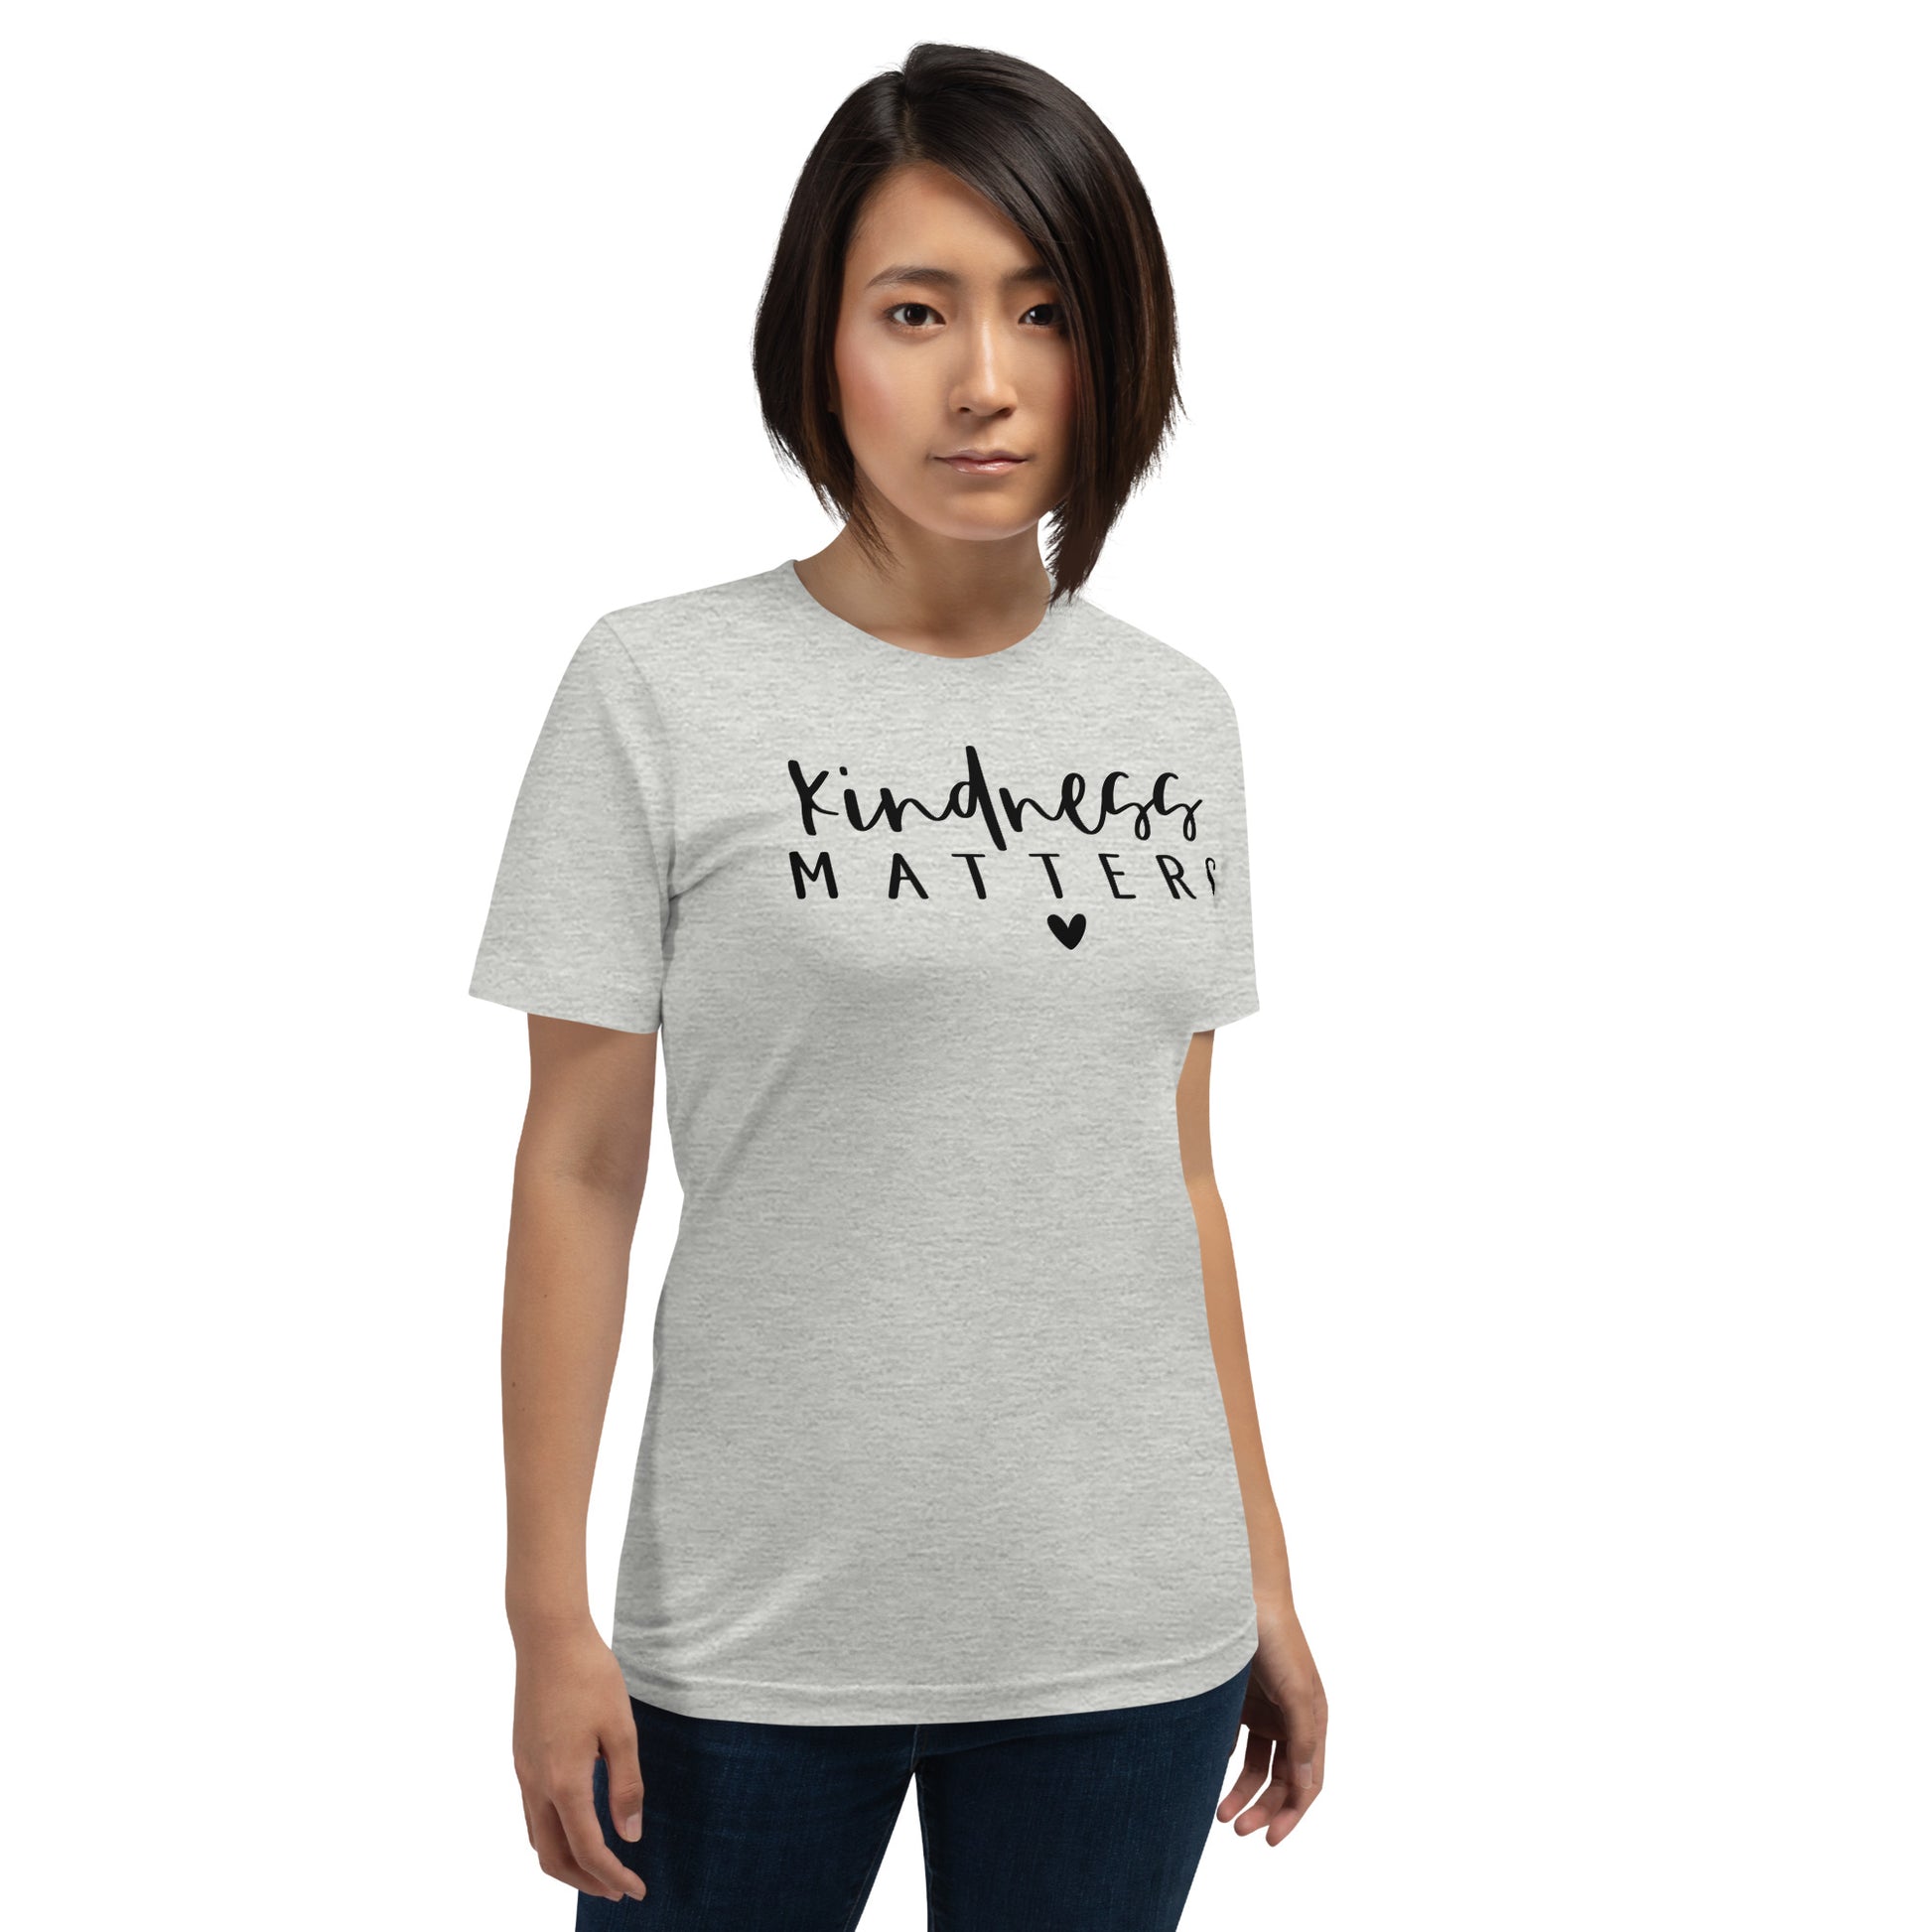 "Kindness Matters" T-shirt